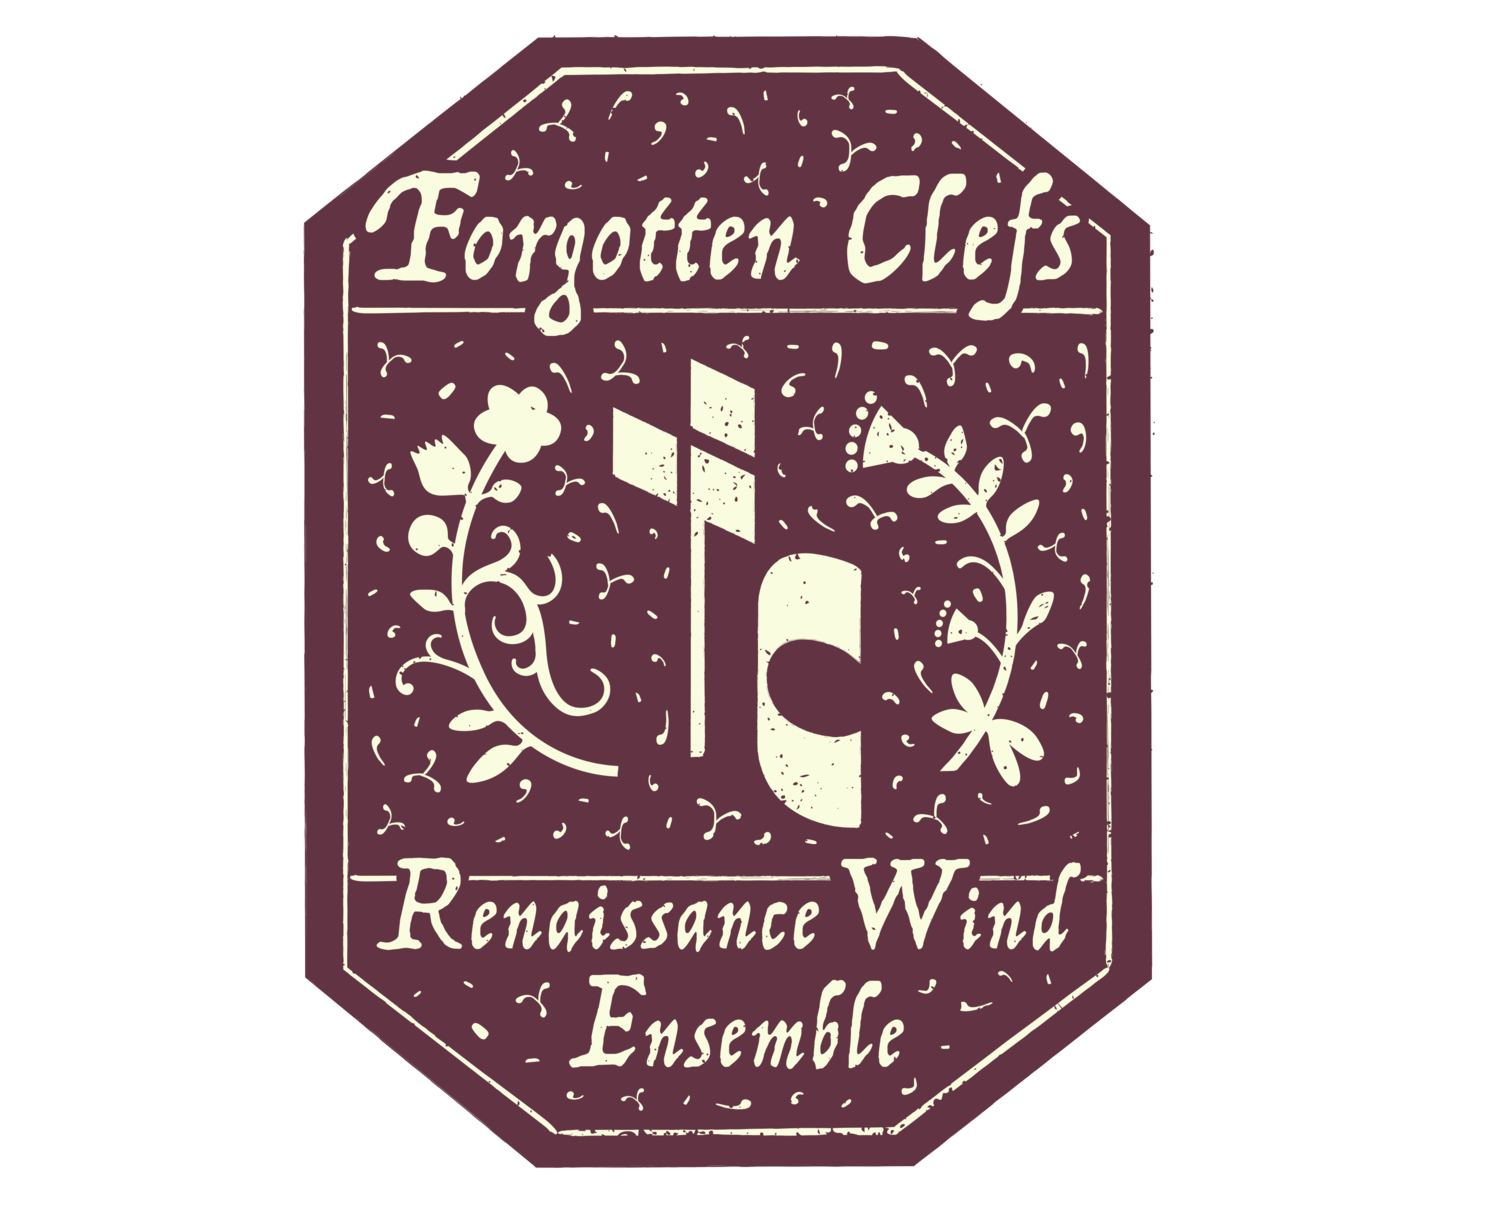 Forgotten Clefs Renaissance Wind Ensemble logo